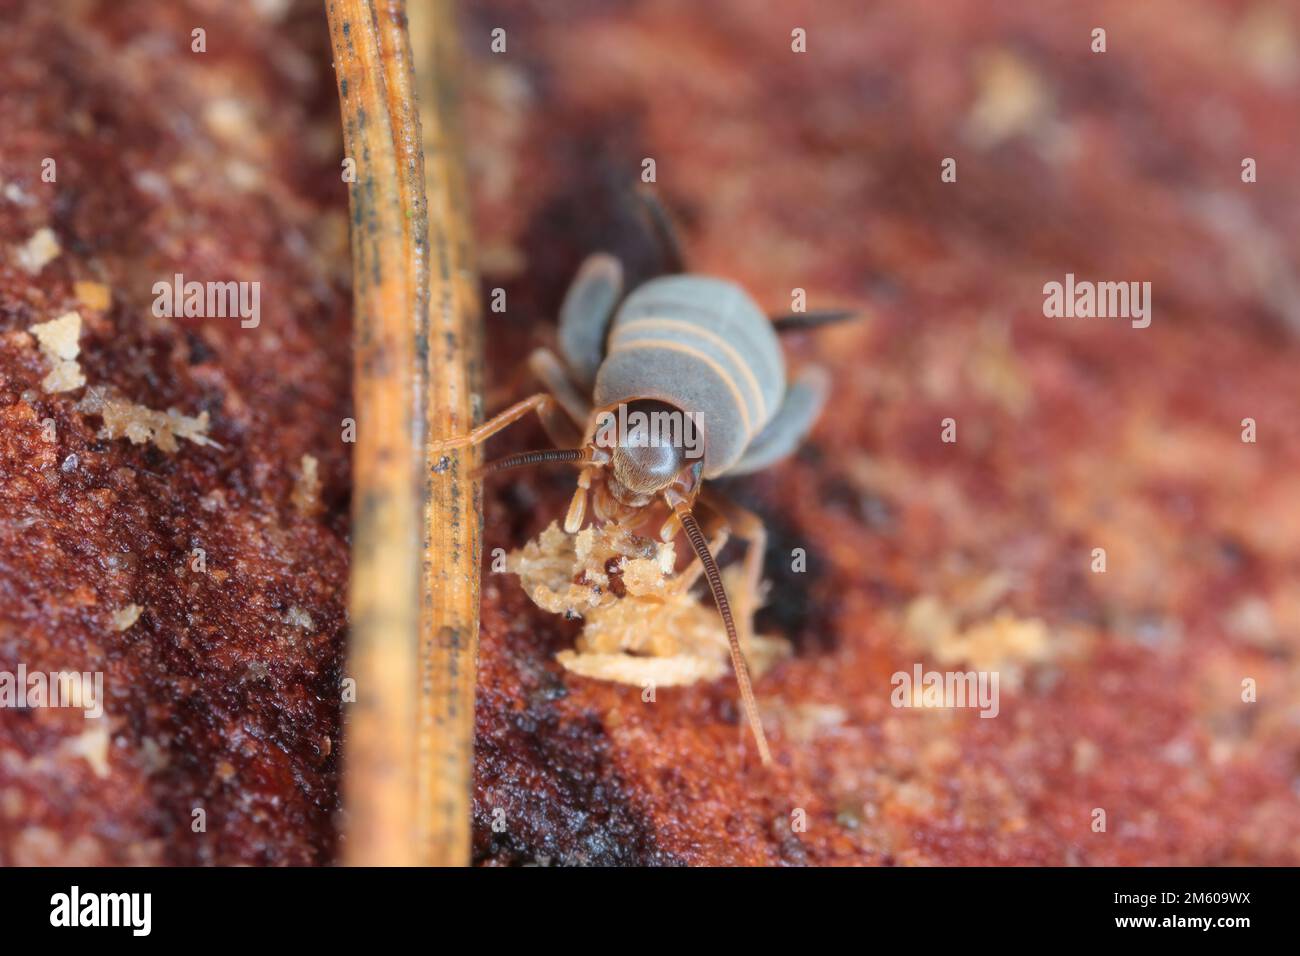 Cricket ANT loving, cricket ANT, cricket Myrmecophilous, cricket ANT's nido (Myrmecophilus acervorum). Un insetto in un anhill sotto la corteccia. Foto Stock